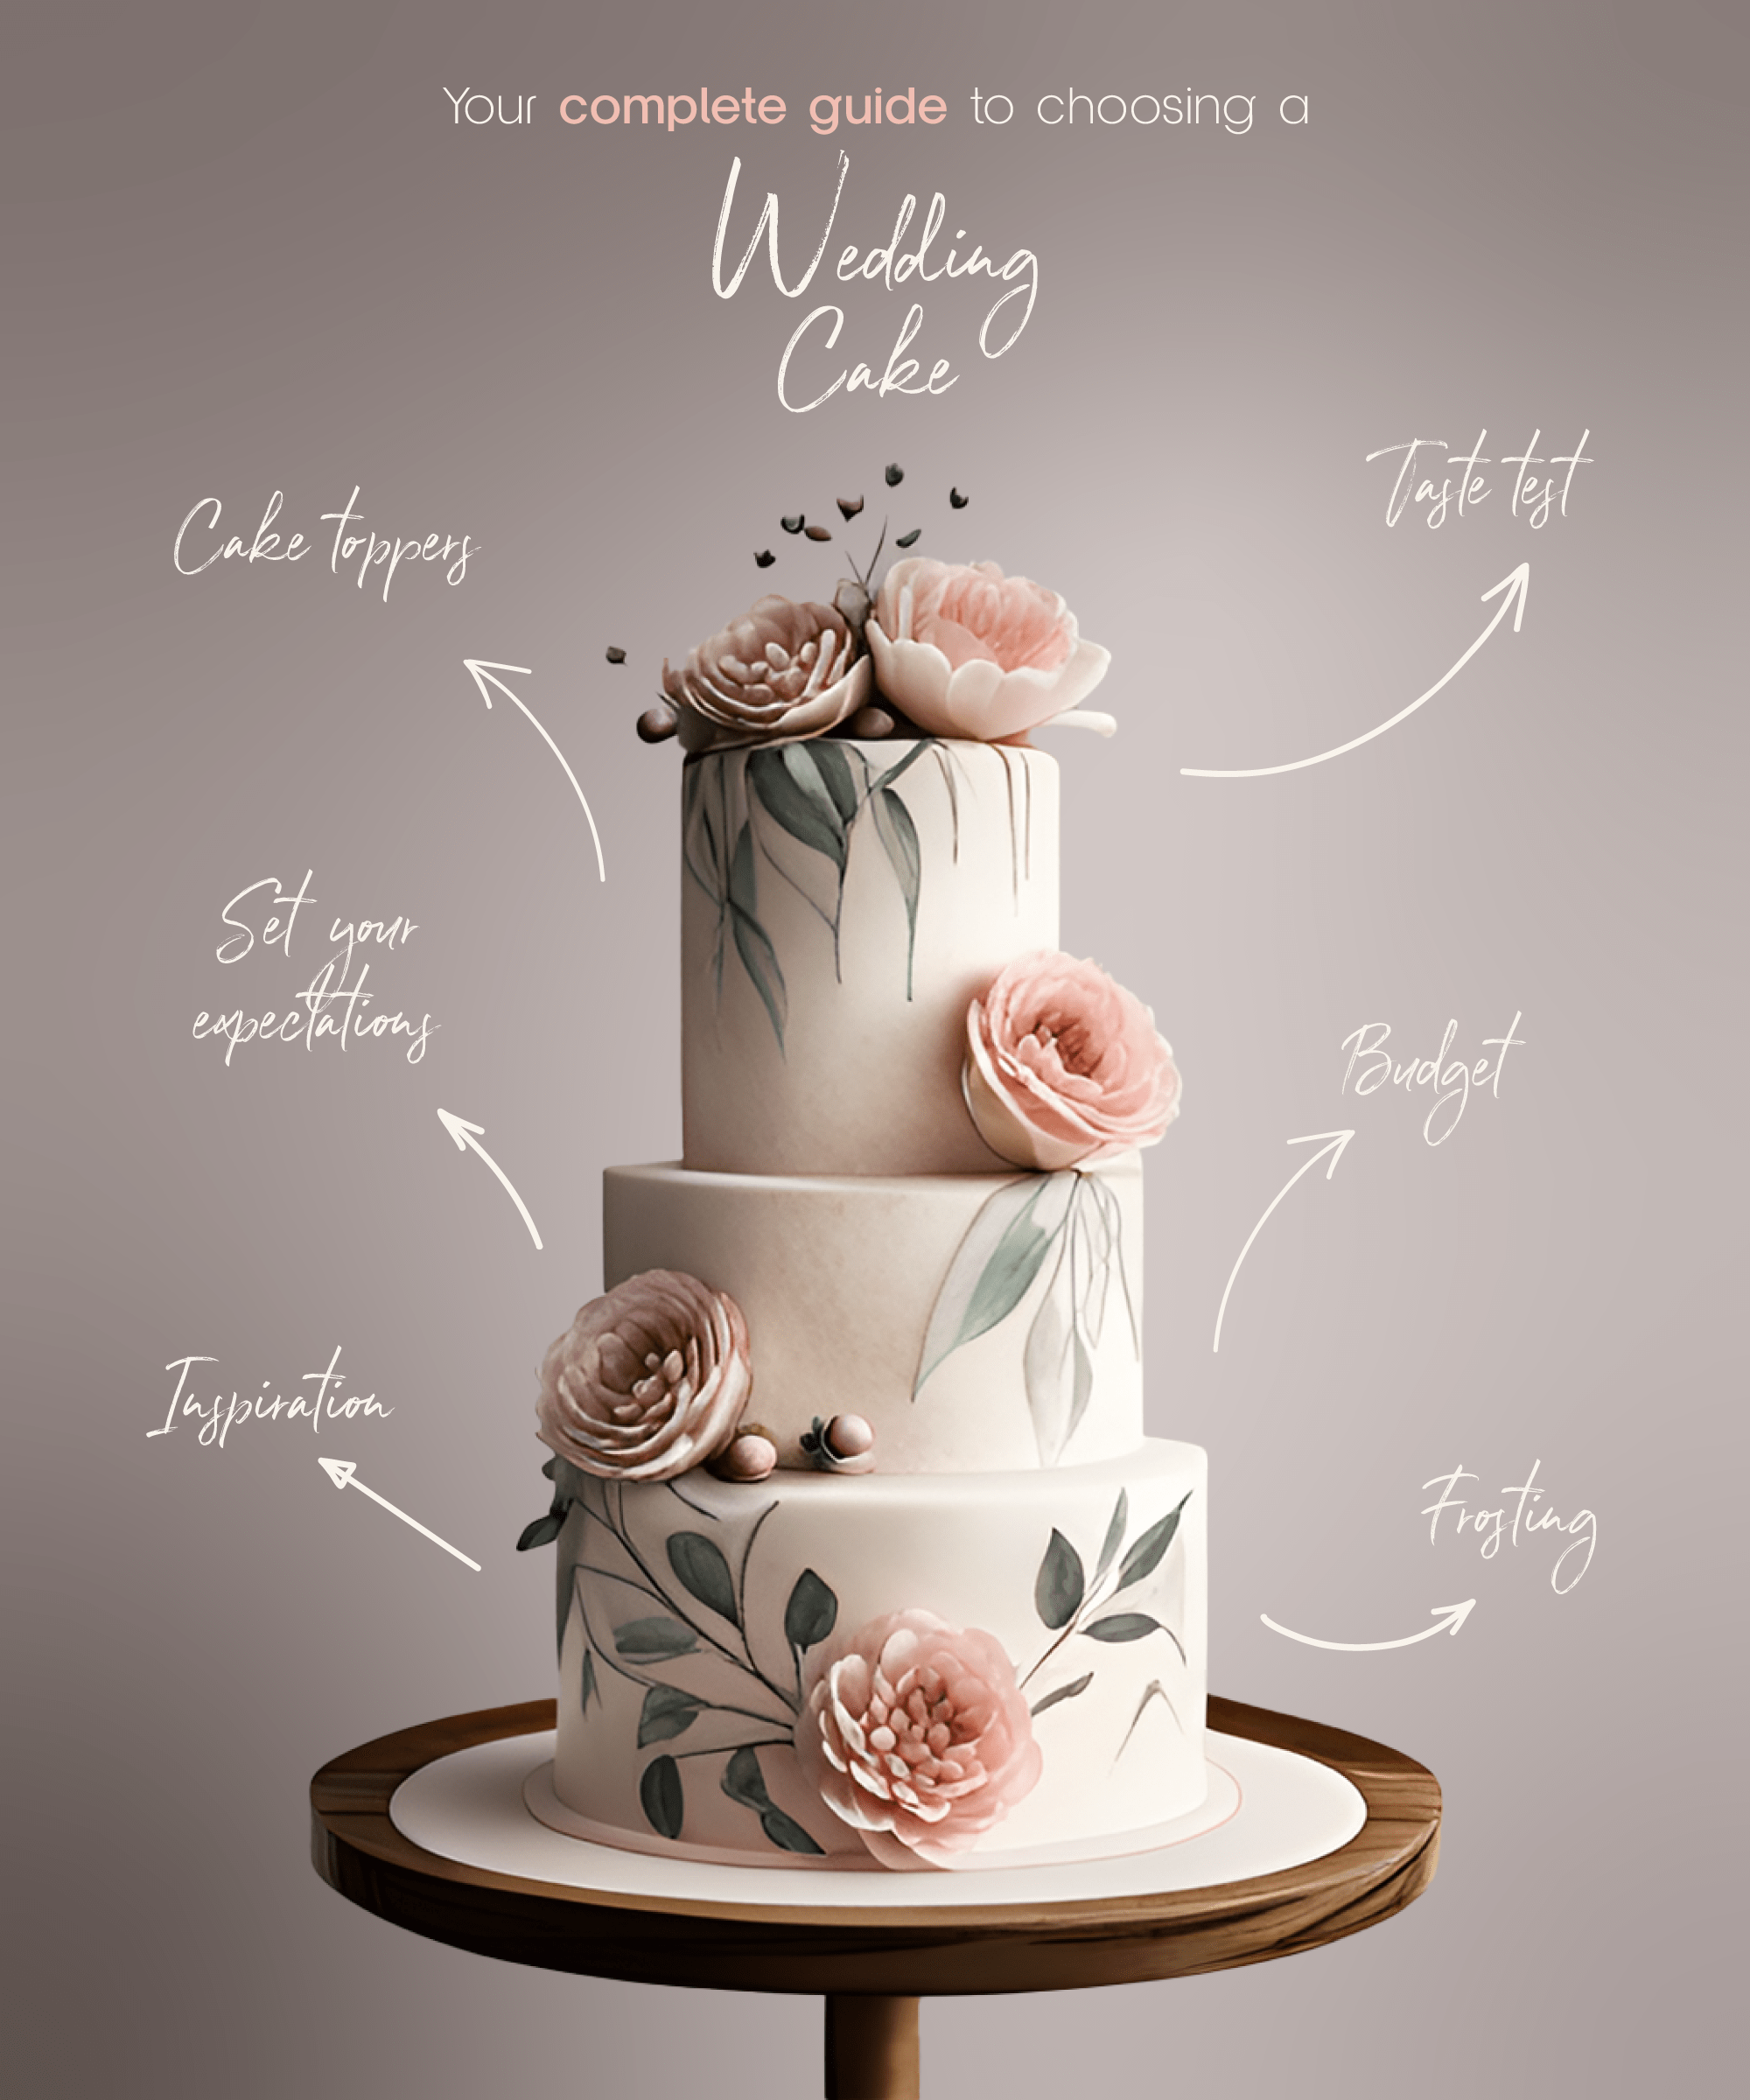 Wedding Cake Icing Recipe | Recipes.net